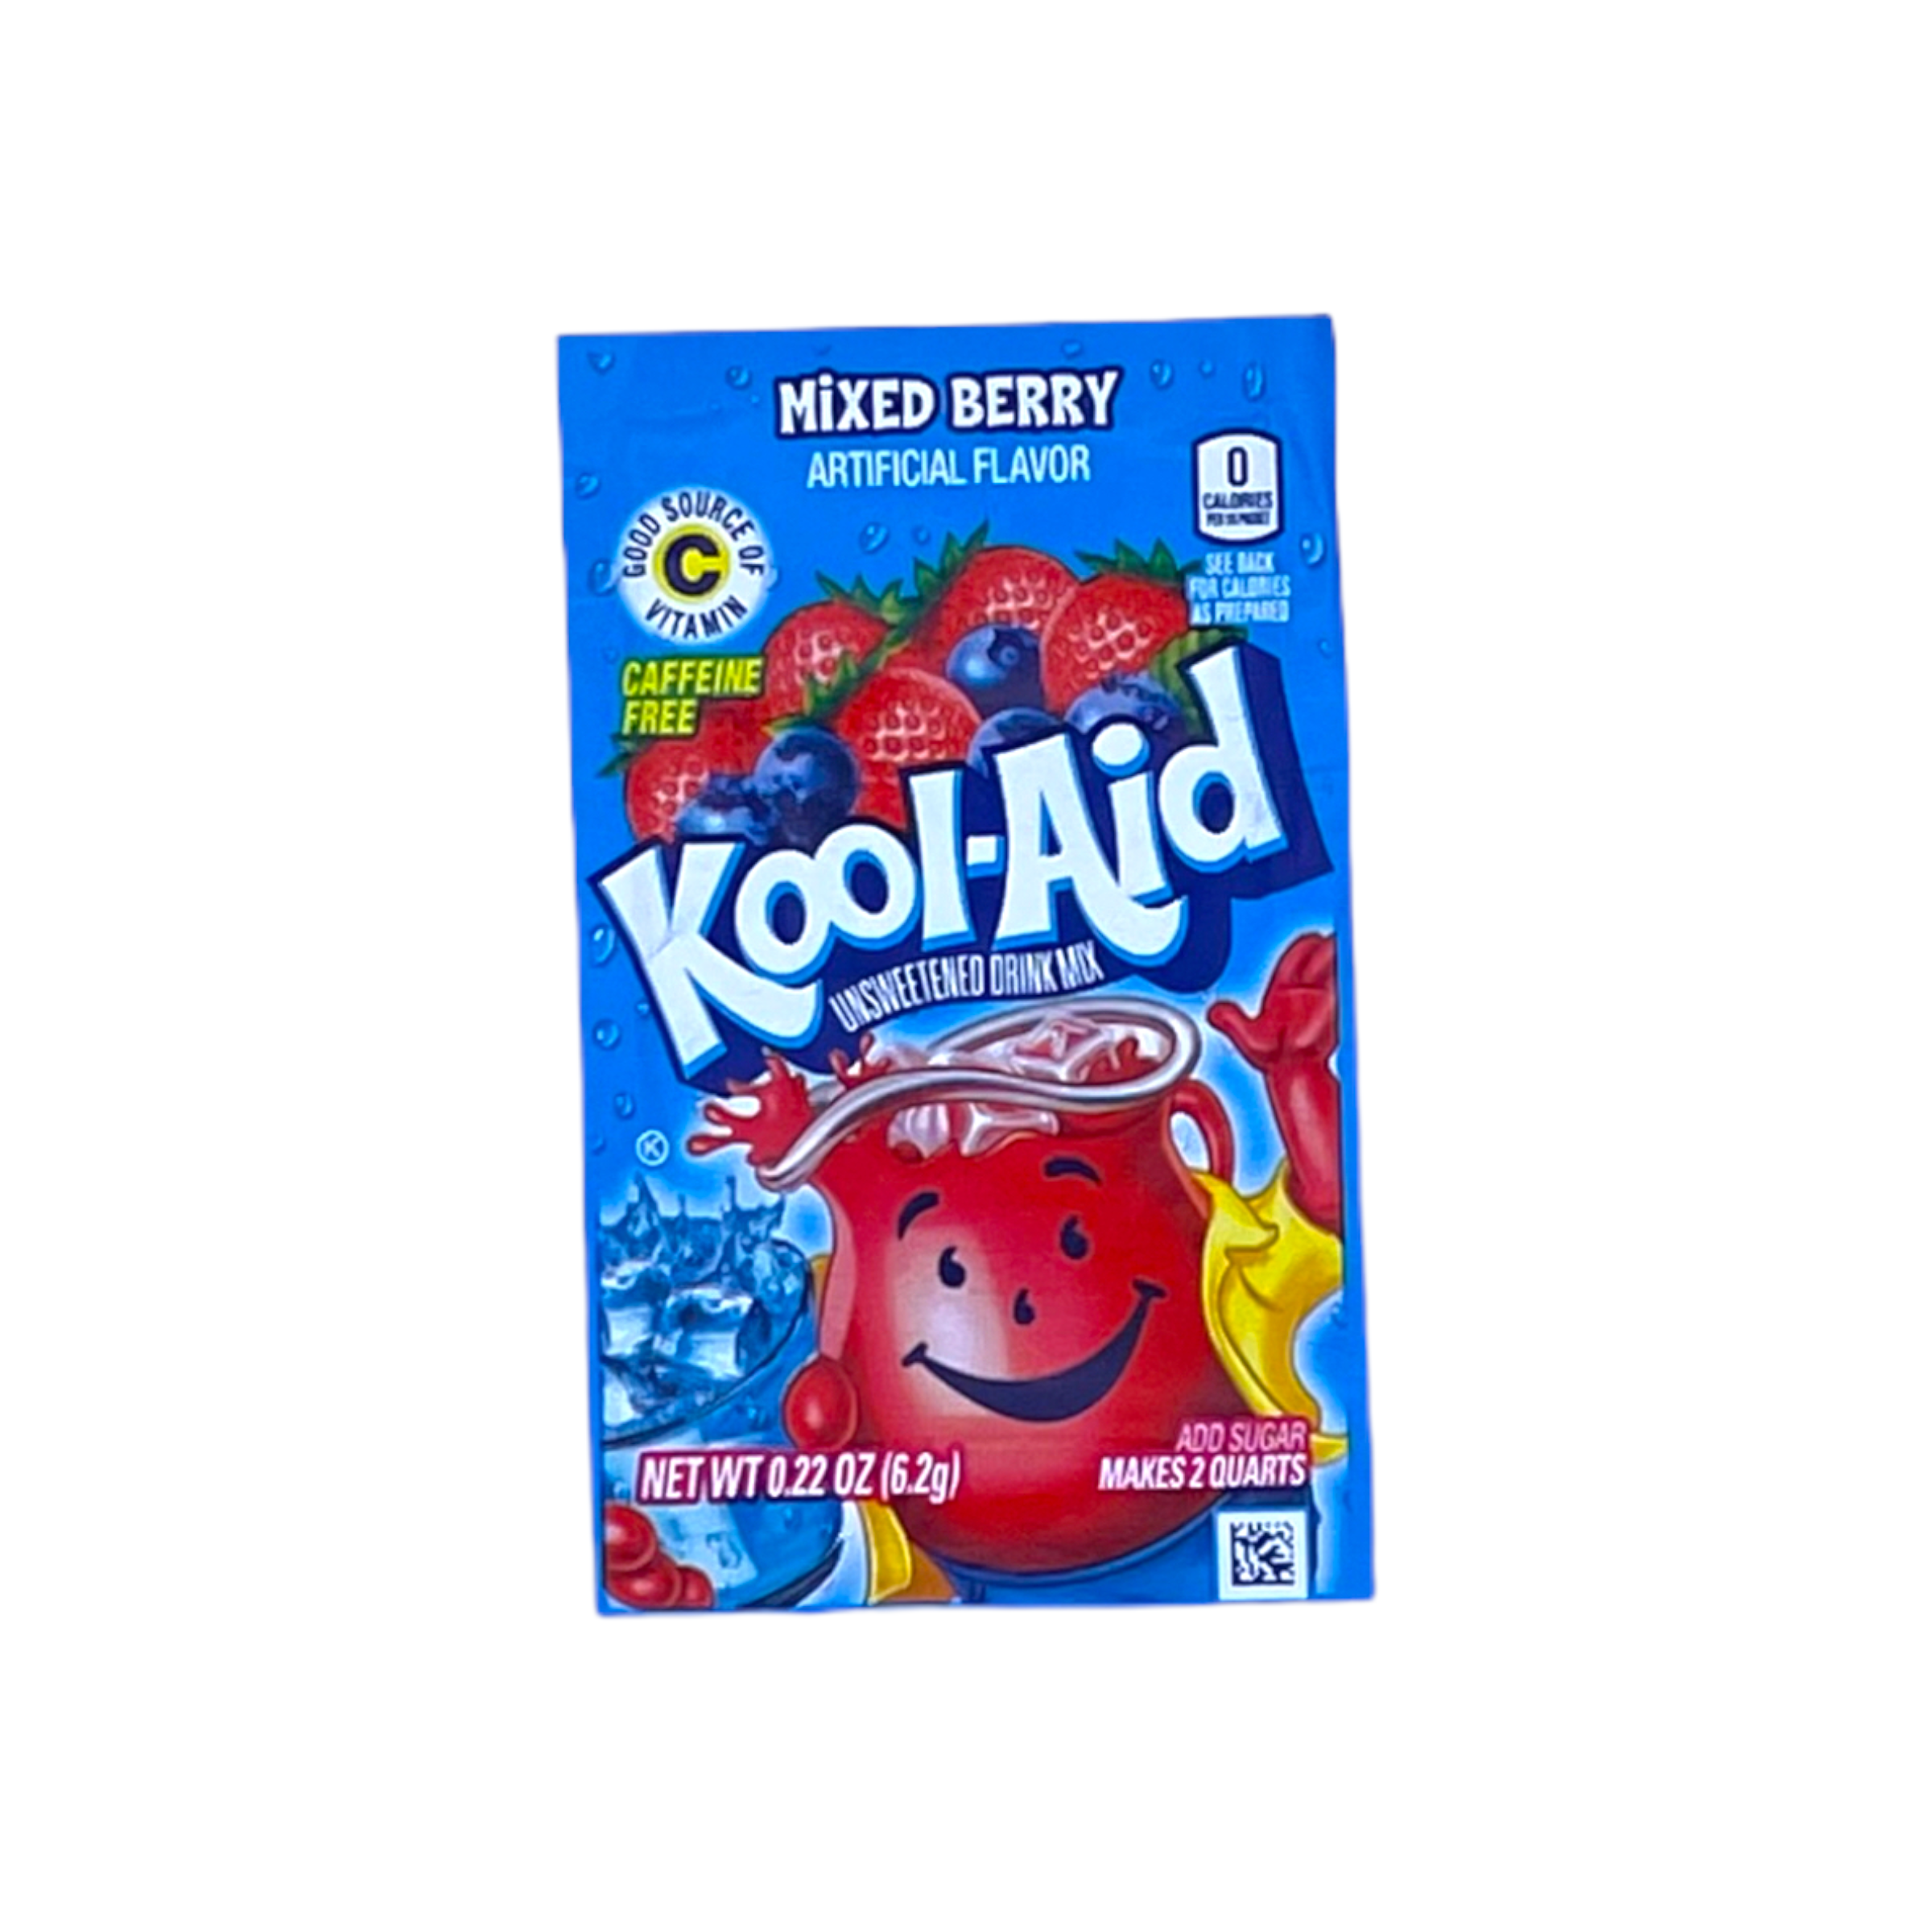 Kool-aid Mixed Berry